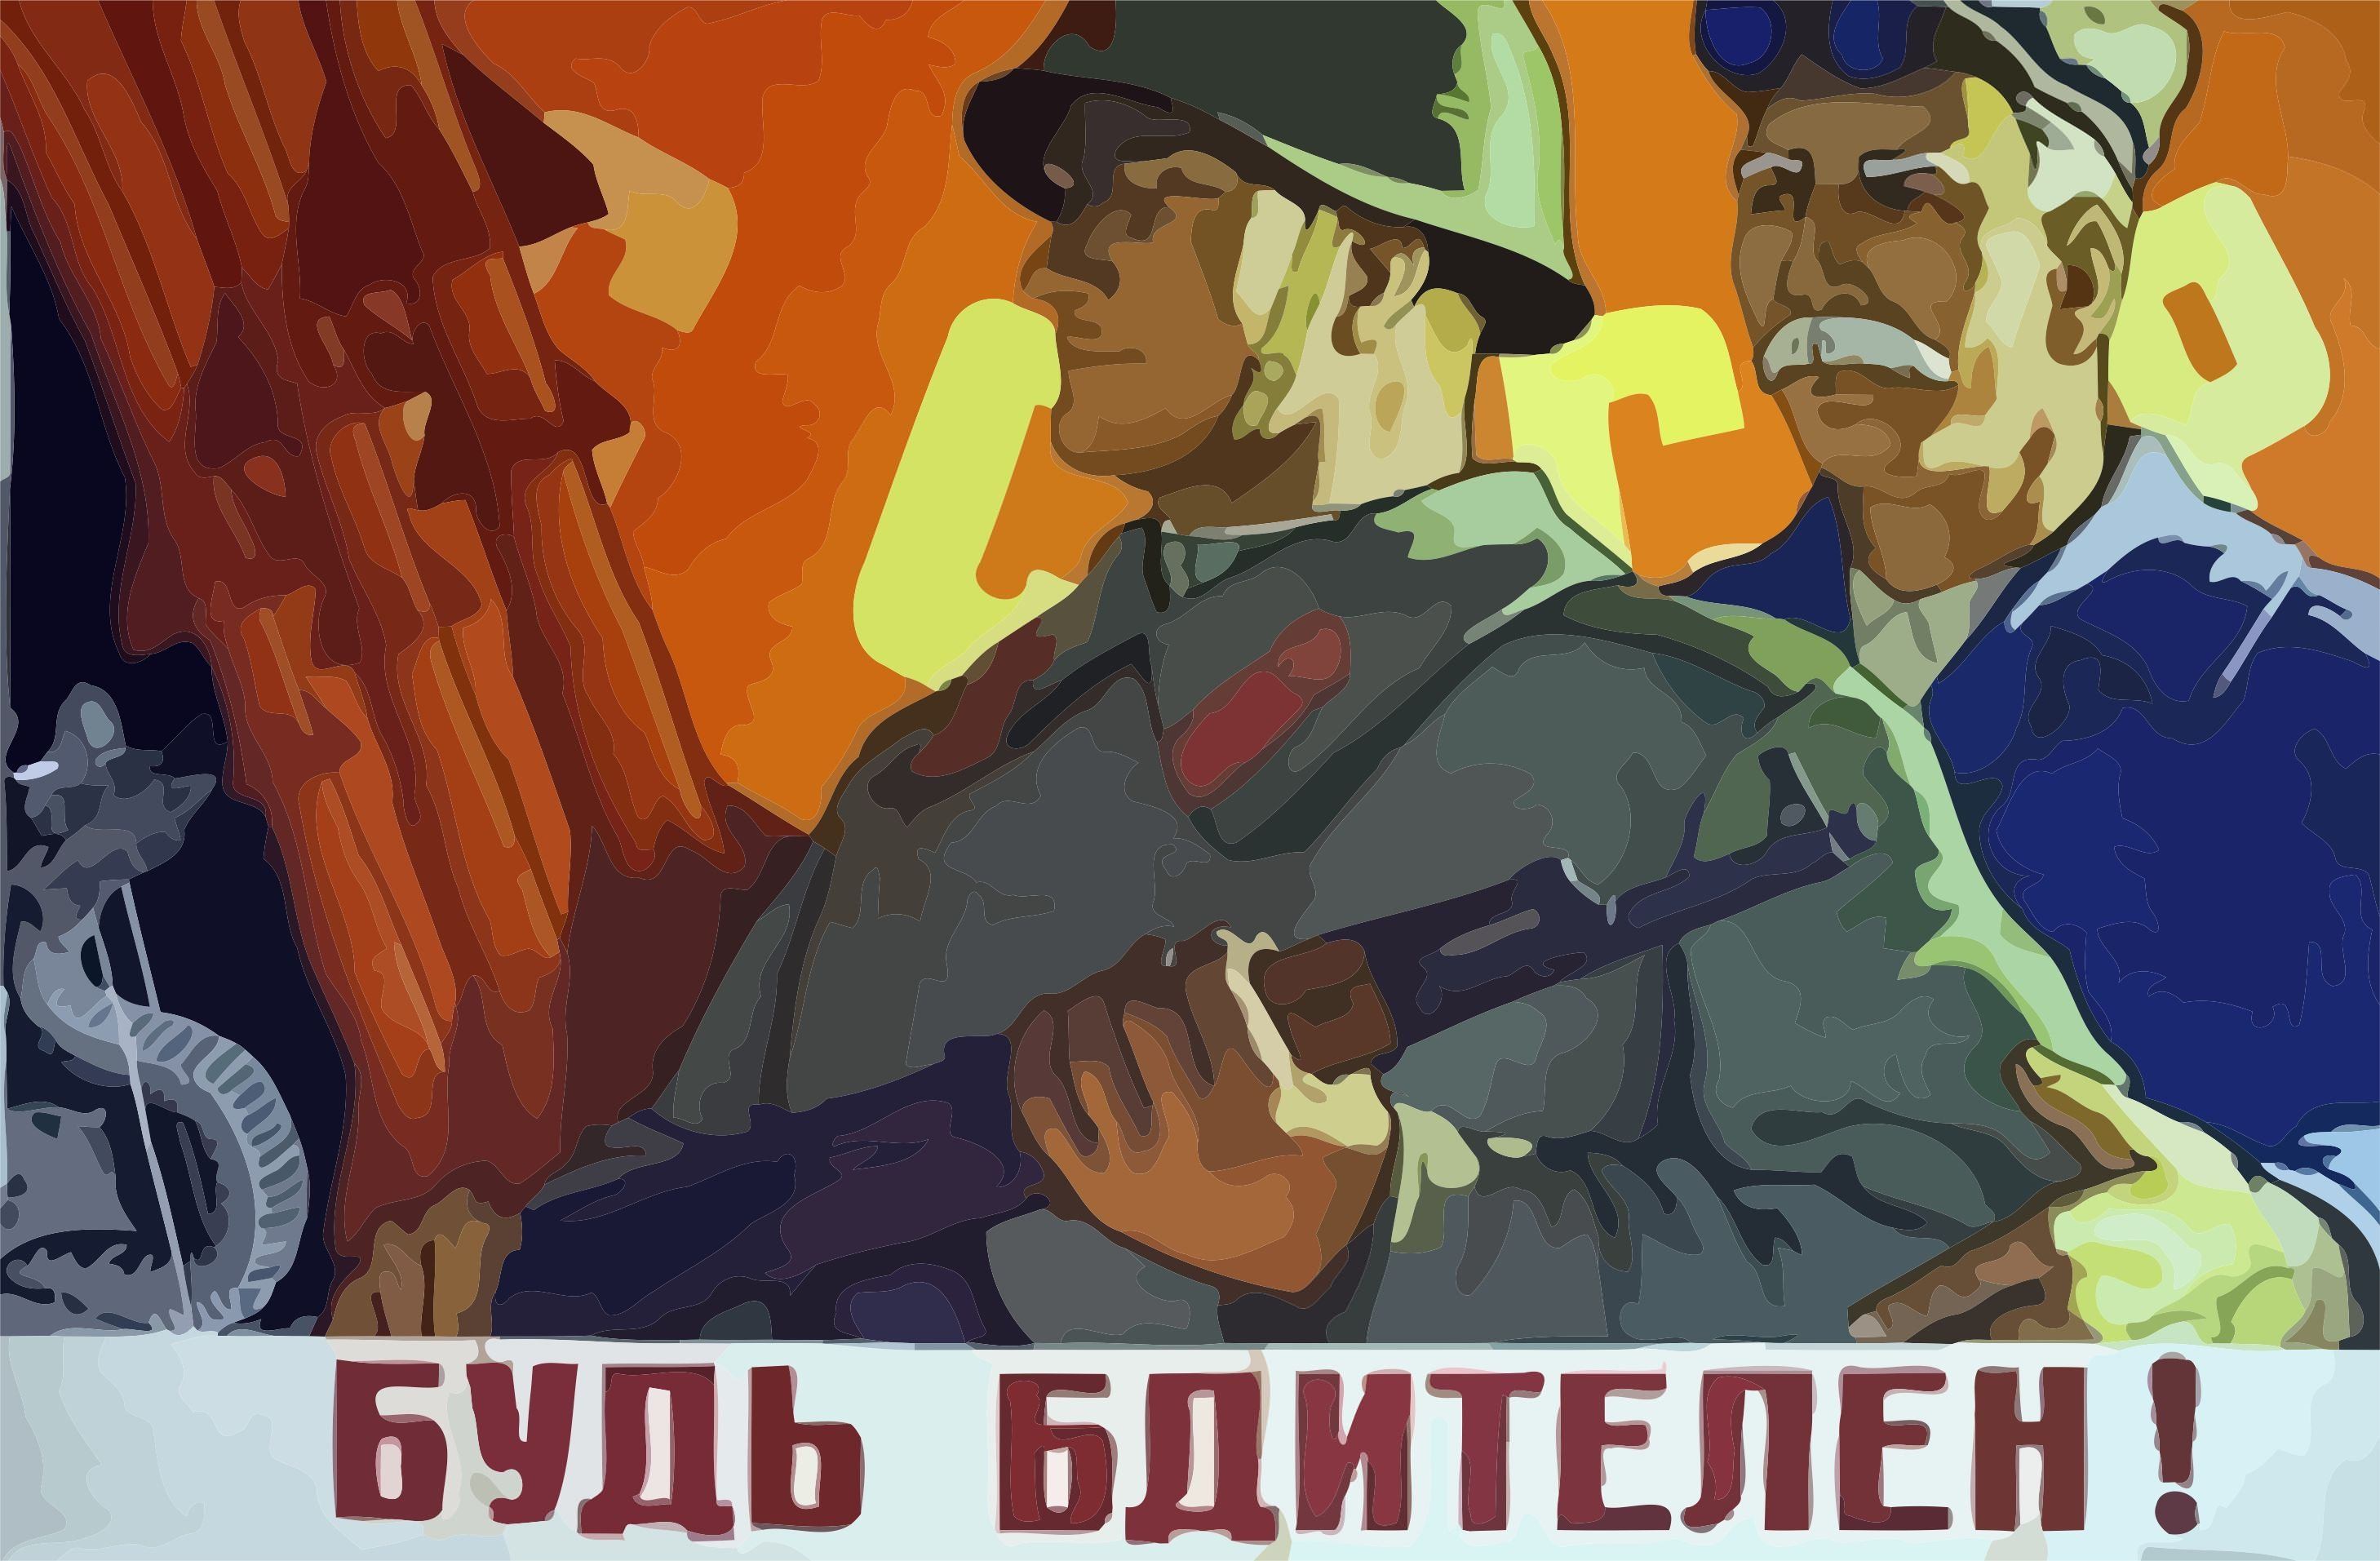 Будь бдителен плакат. Советские плакаты. Плакаты о бдительности СССР. Будьте бдительны плакат.